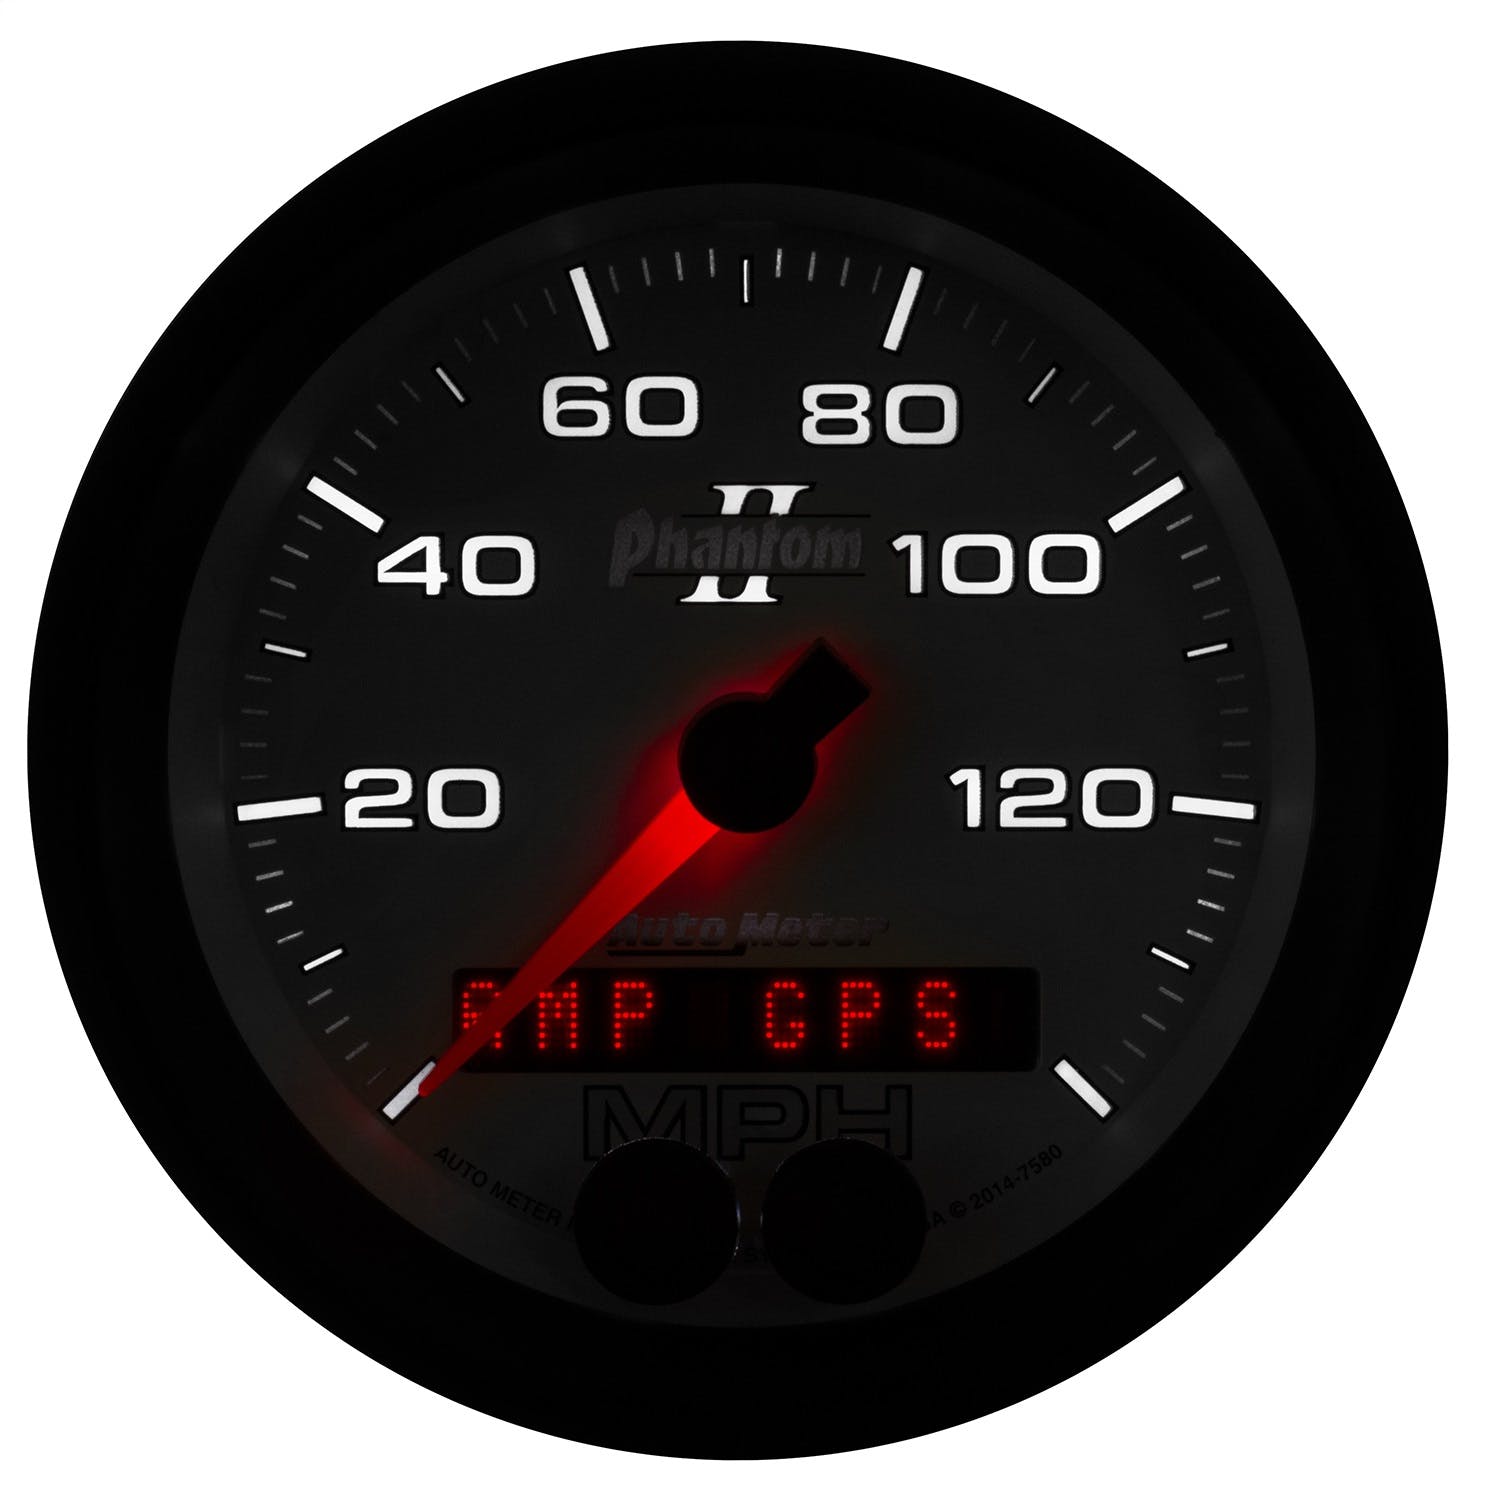 AutoMeter Products 7580 Phantom II /soeedineter Gauge 3 3/8, 140mph, GPS